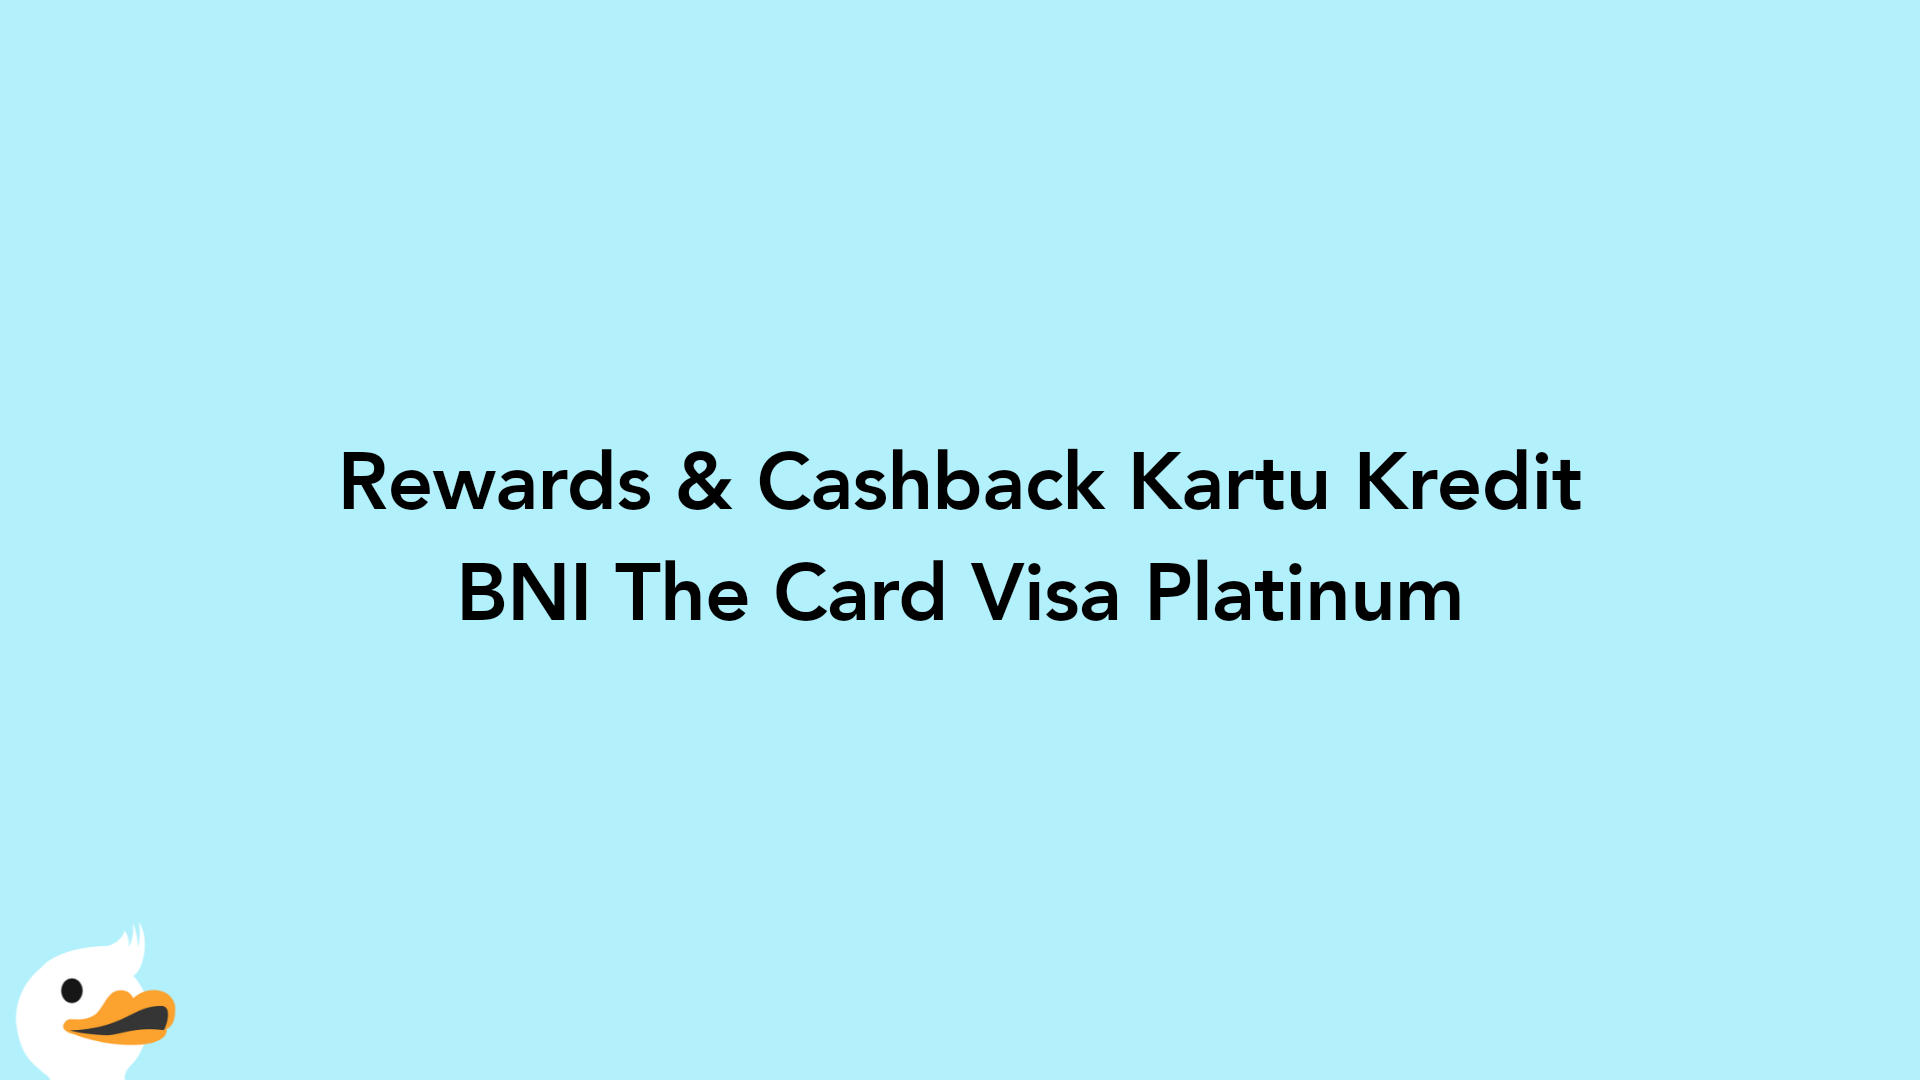 Rewards & Cashback Kartu Kredit BNI The Card Visa Platinum